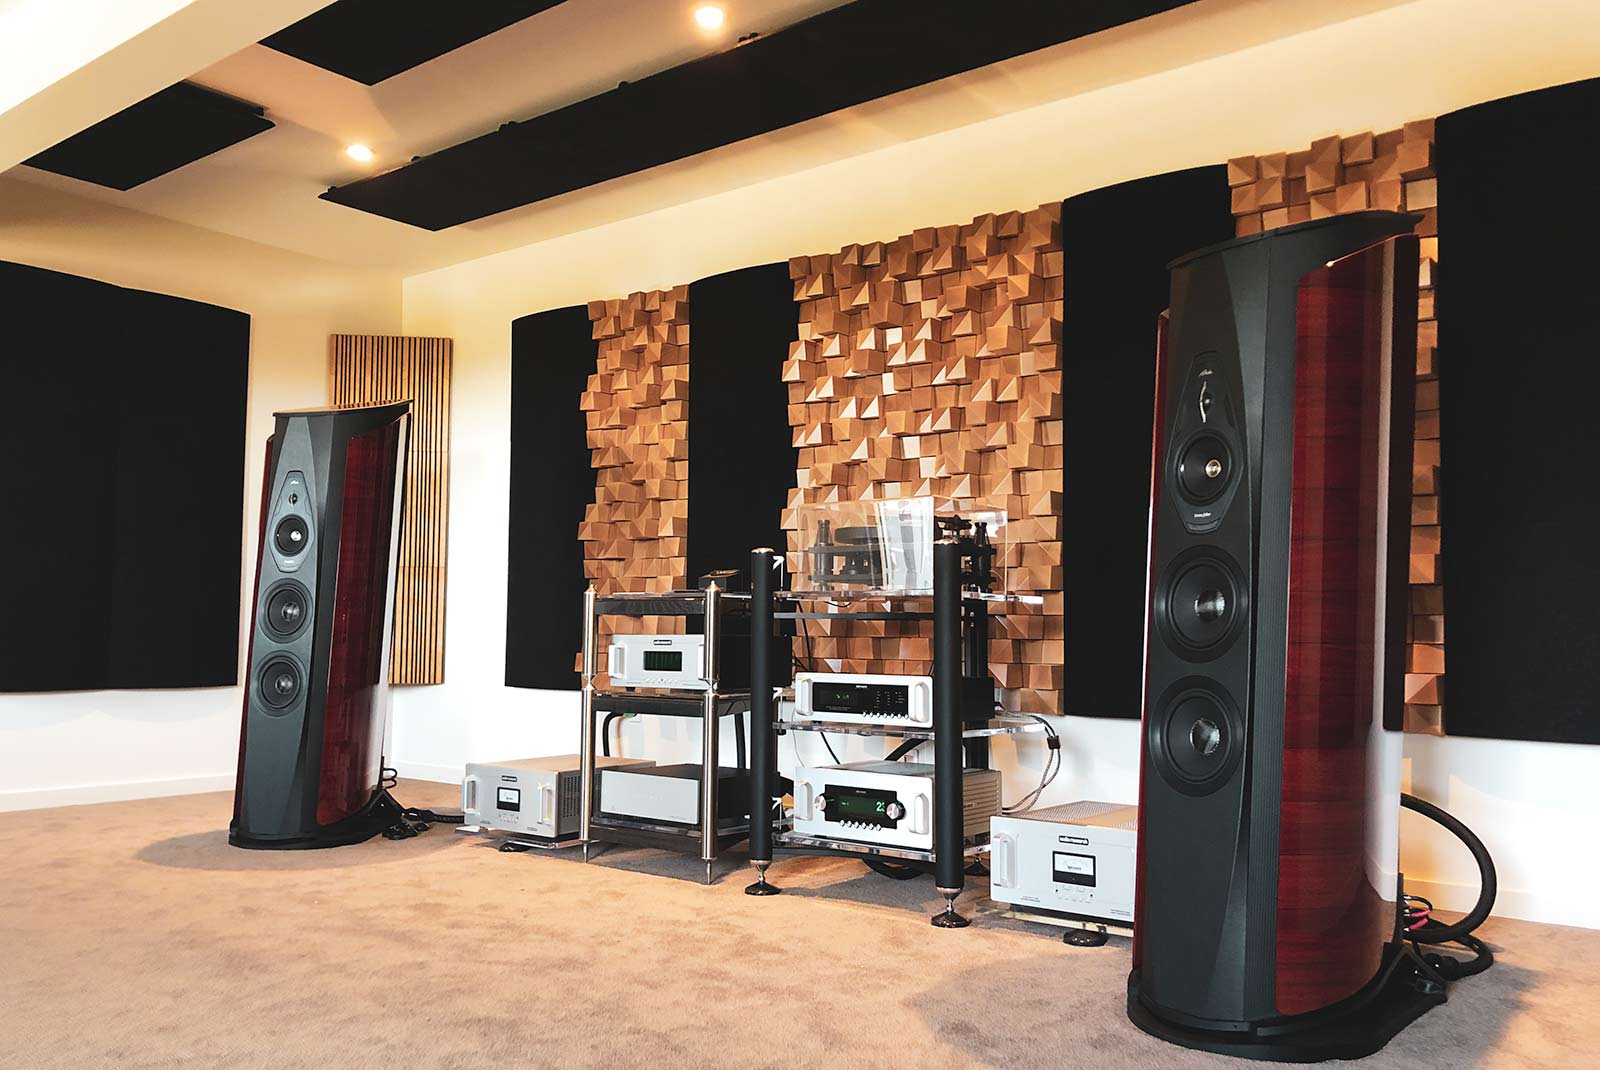 Soundline audio system speakers amplifiers